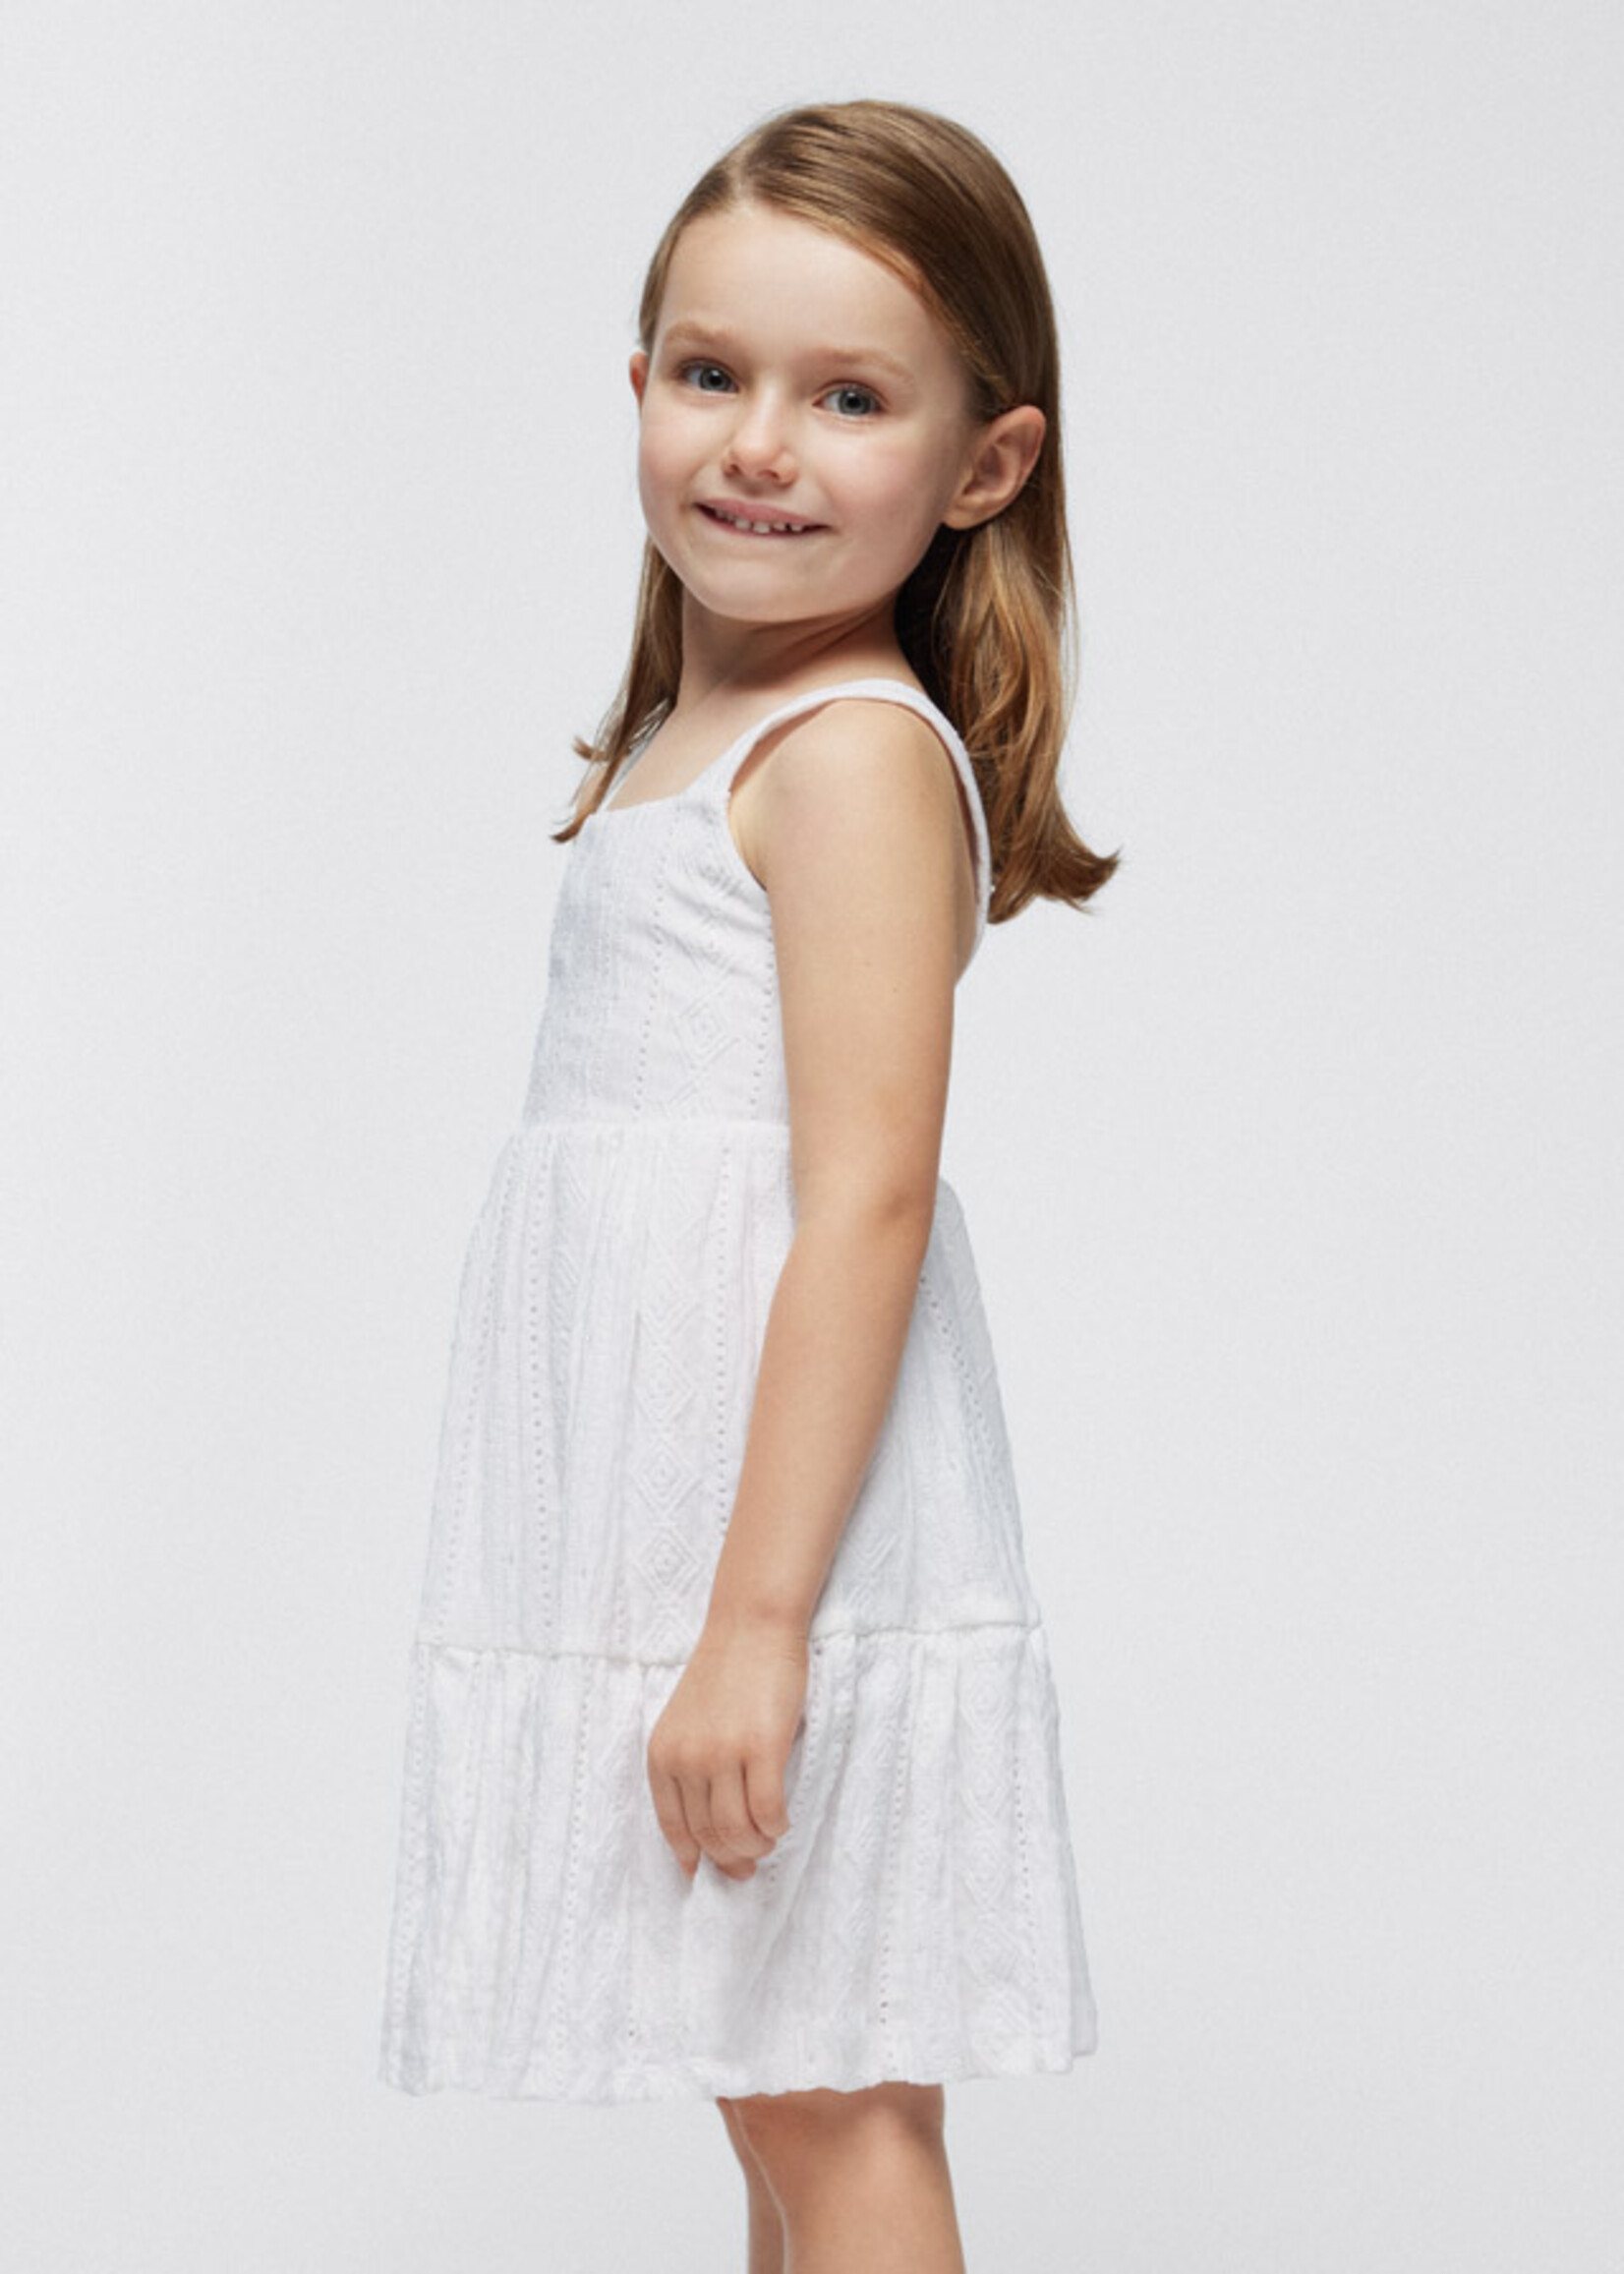 Mayoral Mini Girl            3950 Dress                         White